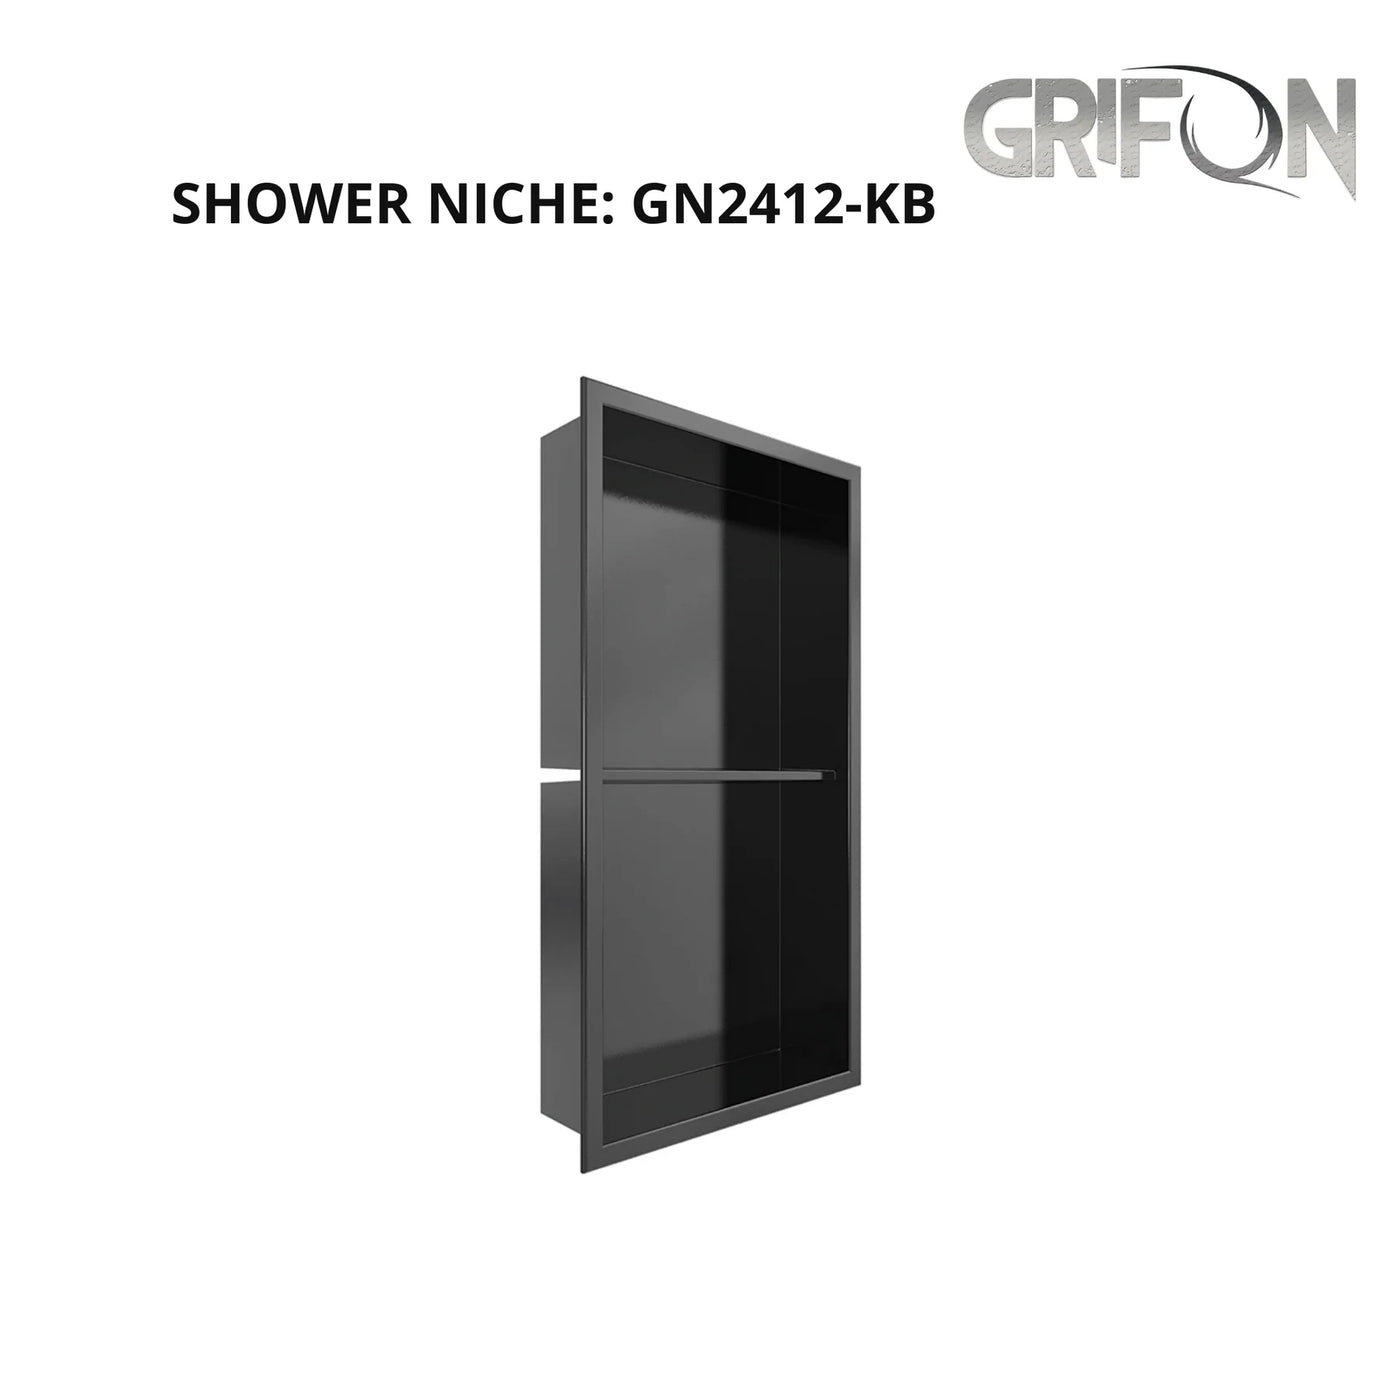 SHOWER NICHE - GN2412-K-BN Stainless Steel Double Bowl Wall-insert Shower Niche